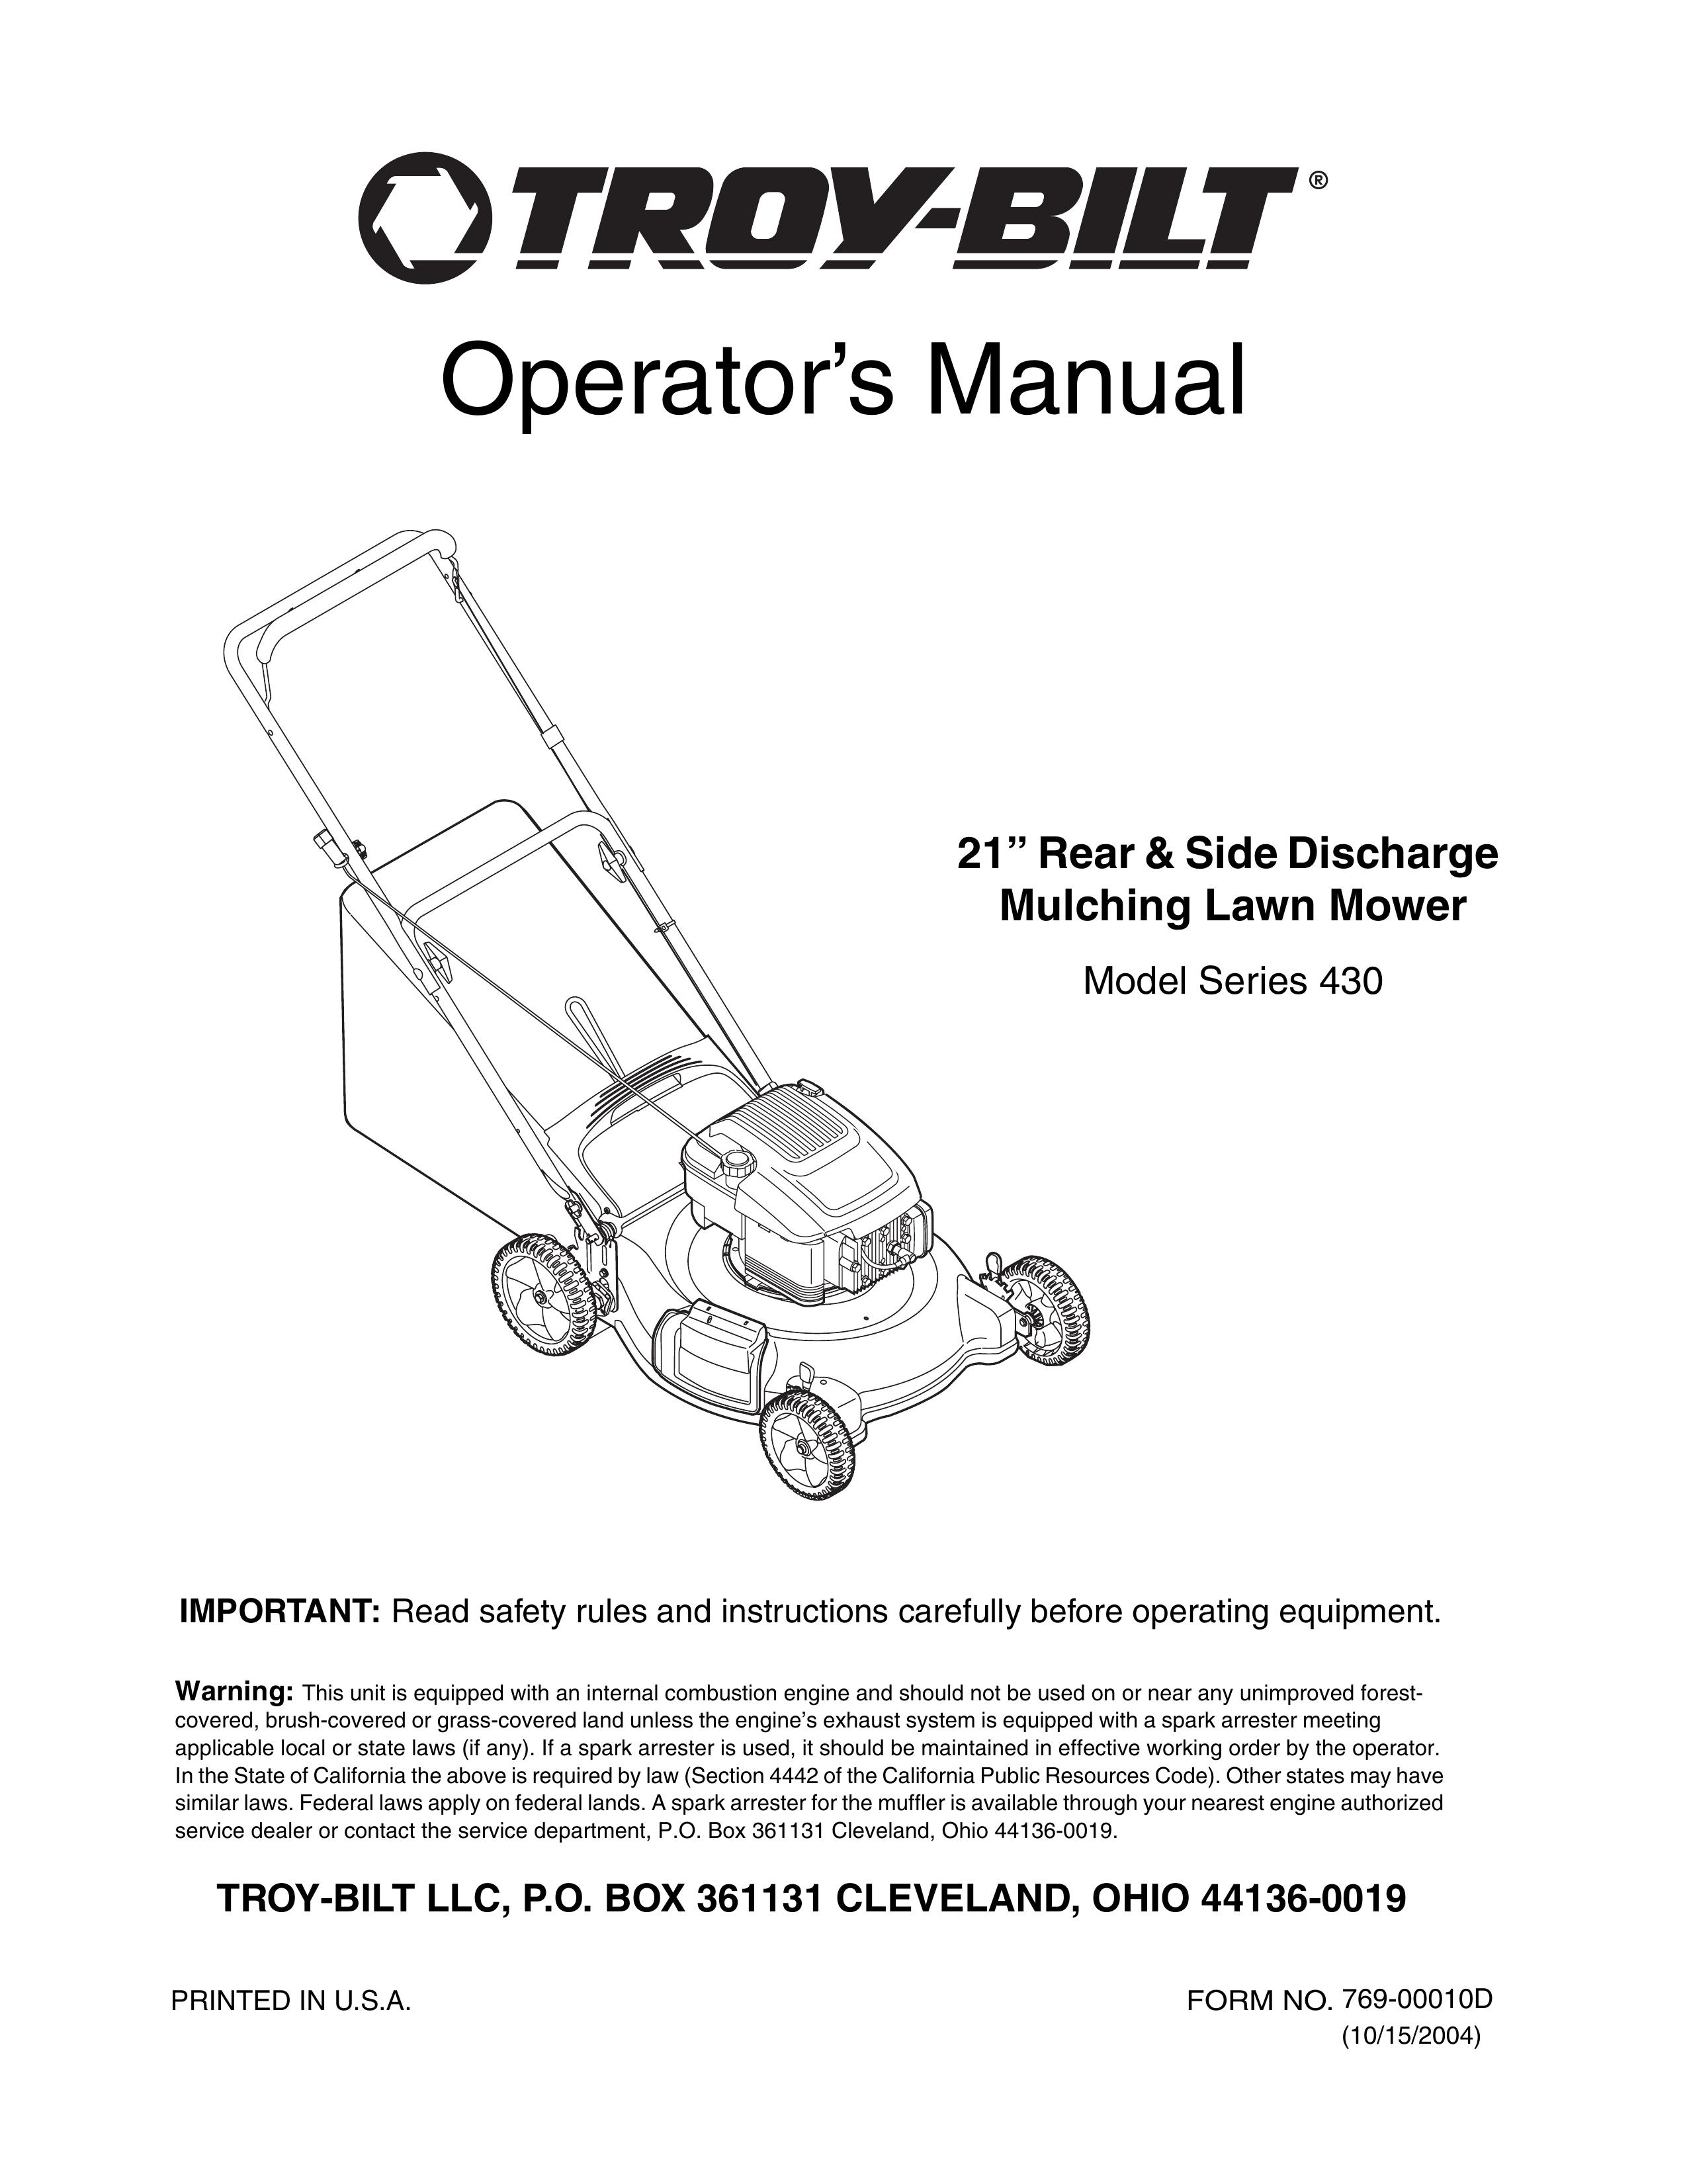 Troy-Bilt 430 Series Lawn Mower User Manual